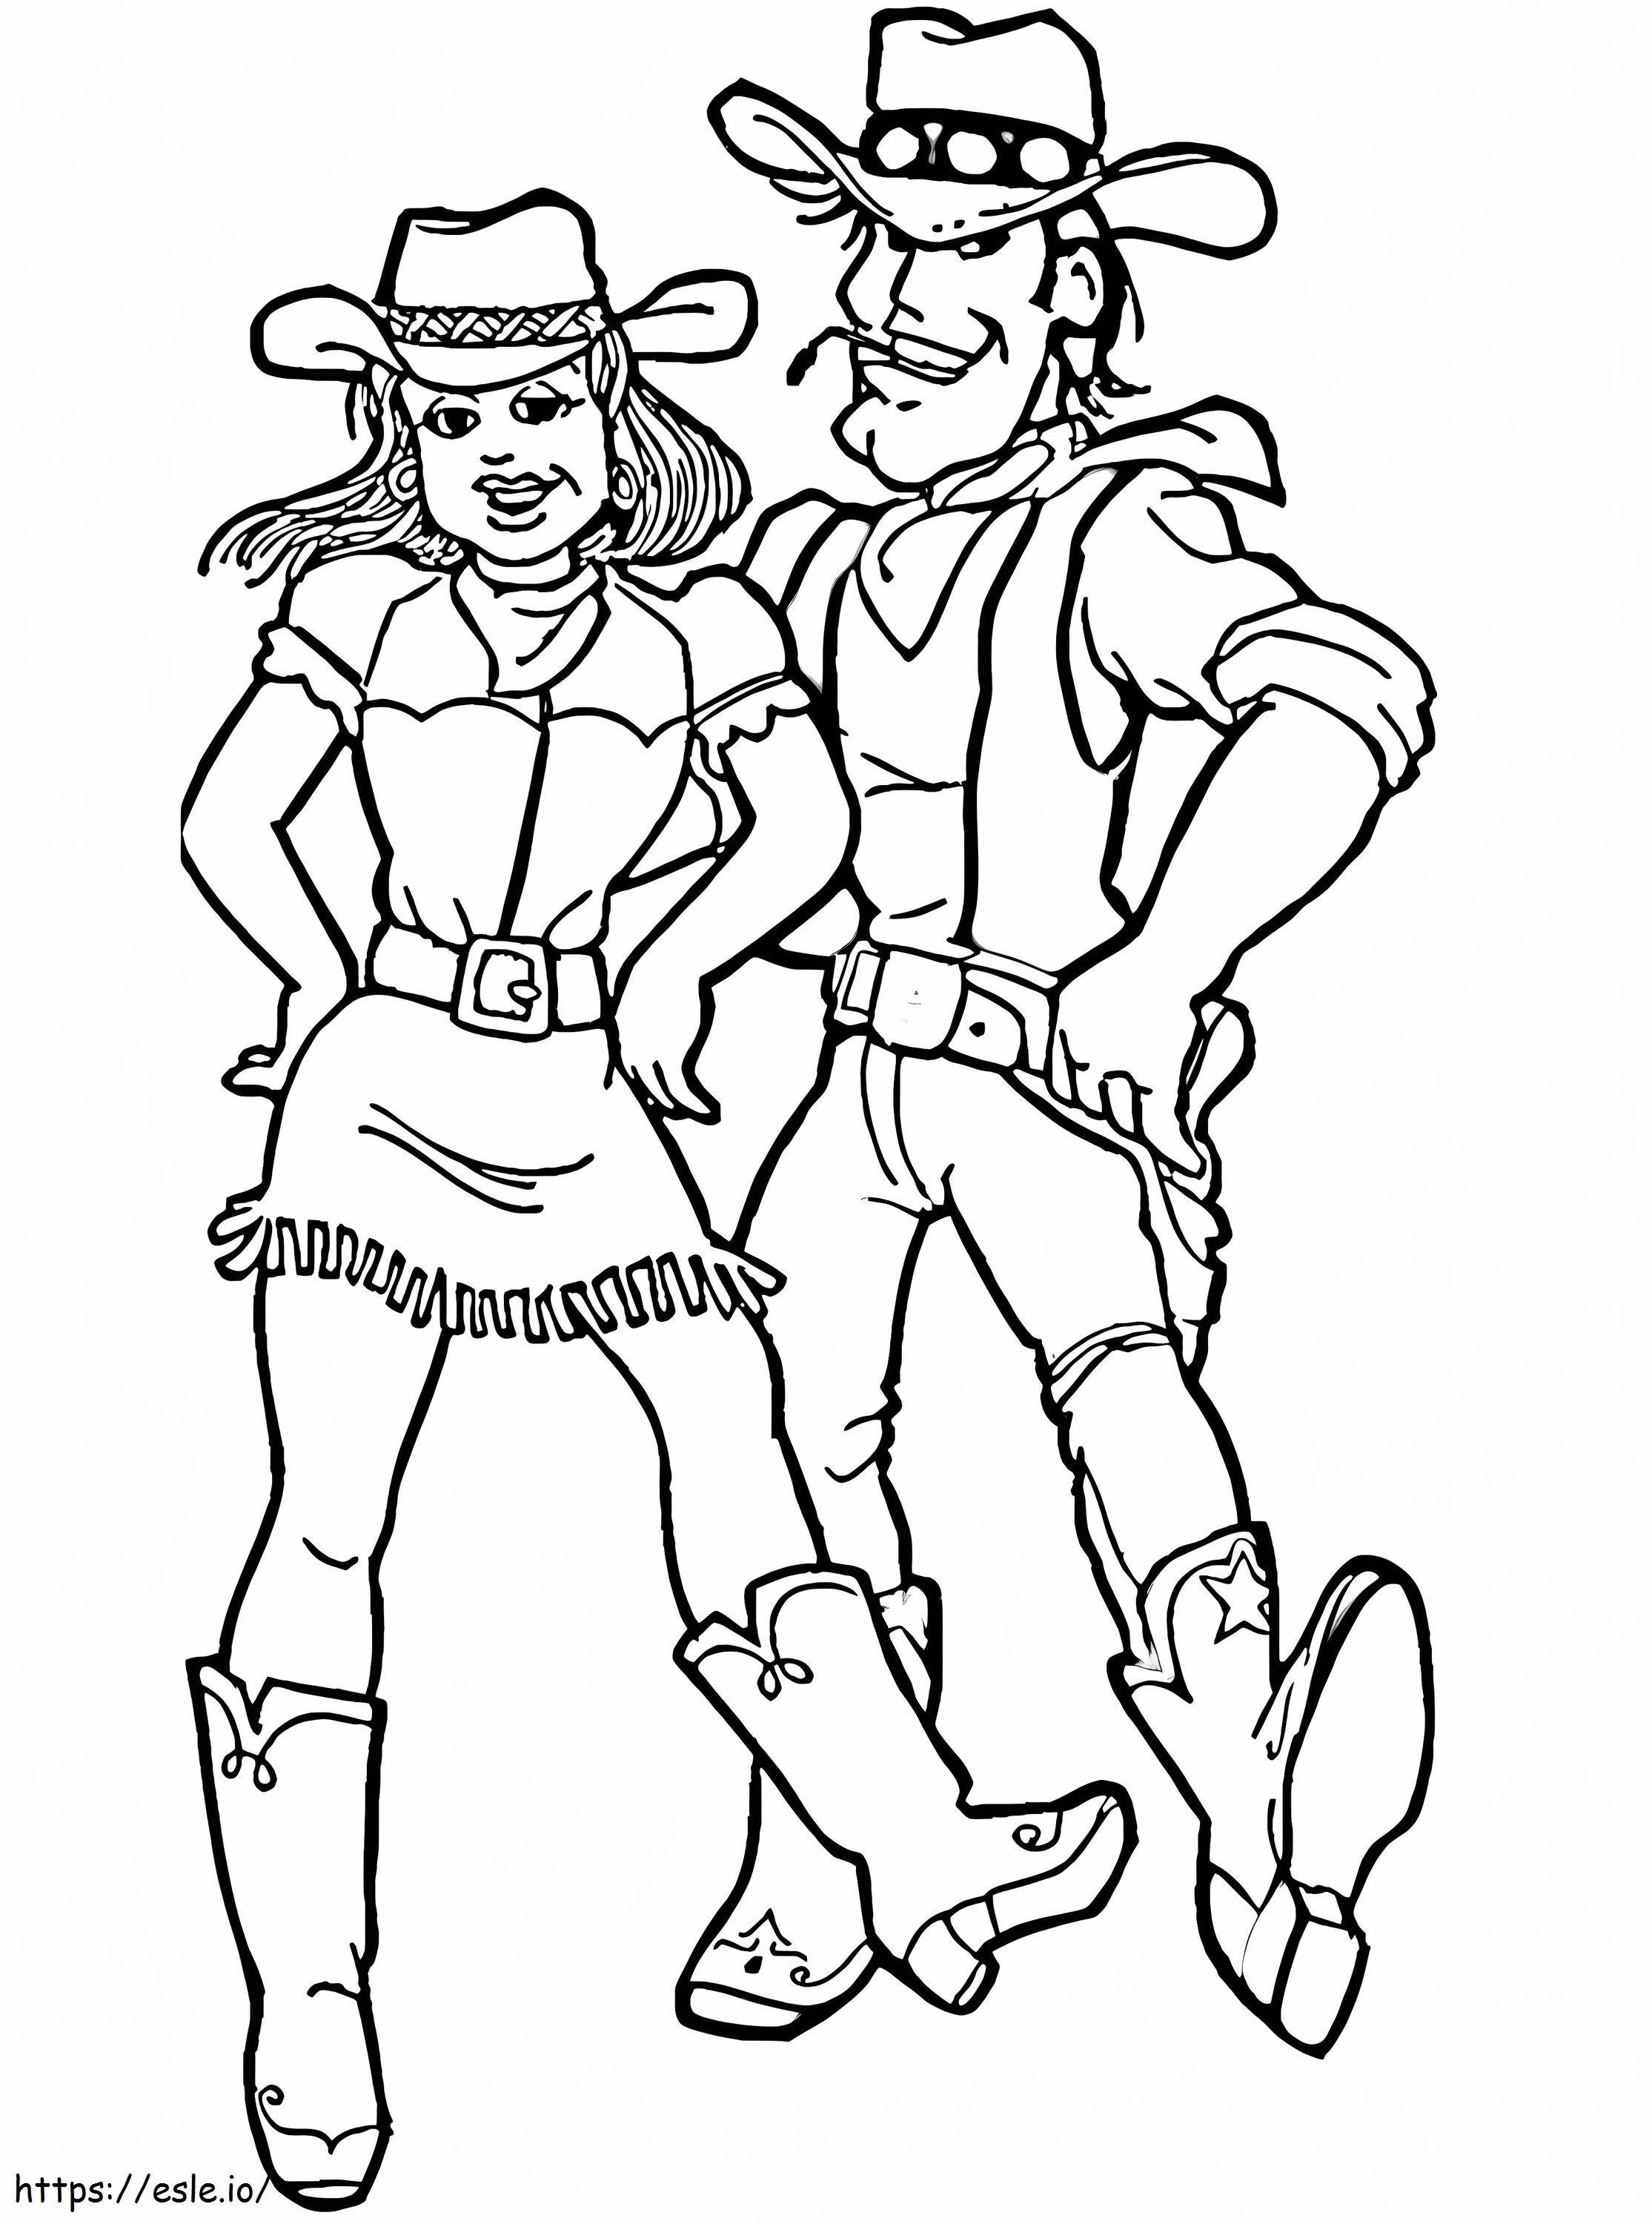 Cowboy Dance coloring page